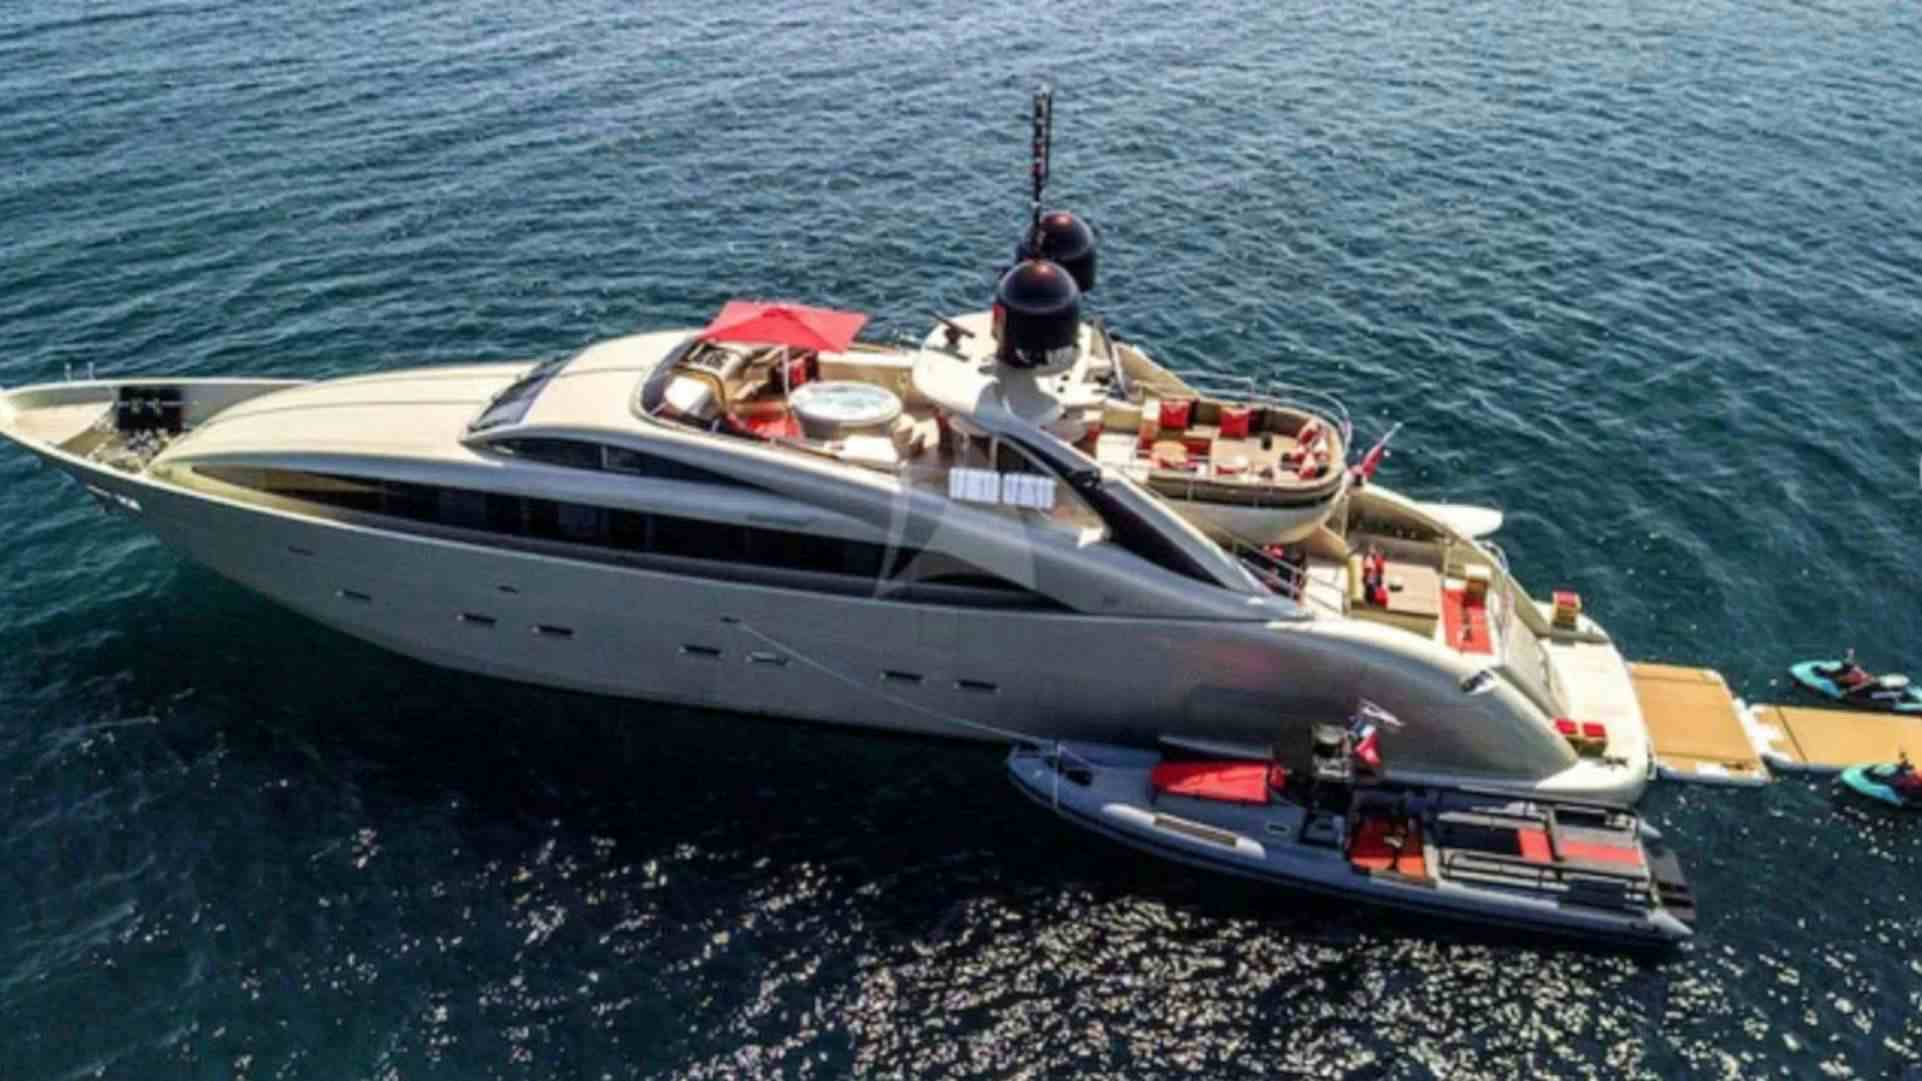 YCM 120 - Motor Boat Charter Bahamas & Boat hire in Riviera, Corsica, Sardinia, Spain, Balearics, Caribbean 1